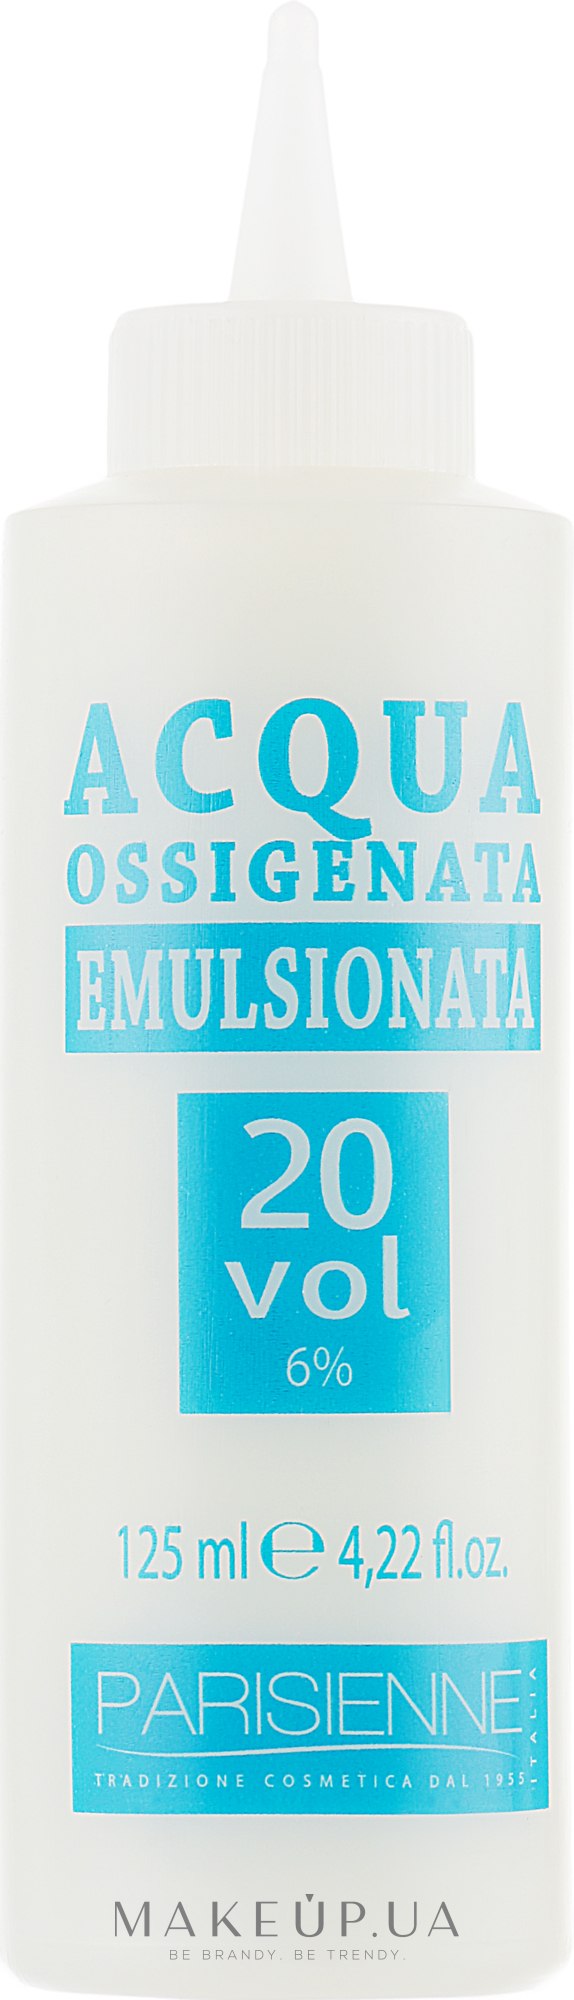 Емульсійний окислювач 20 Vol - Parisienne Acqua Ossigenata Emulsionata — фото 125ml